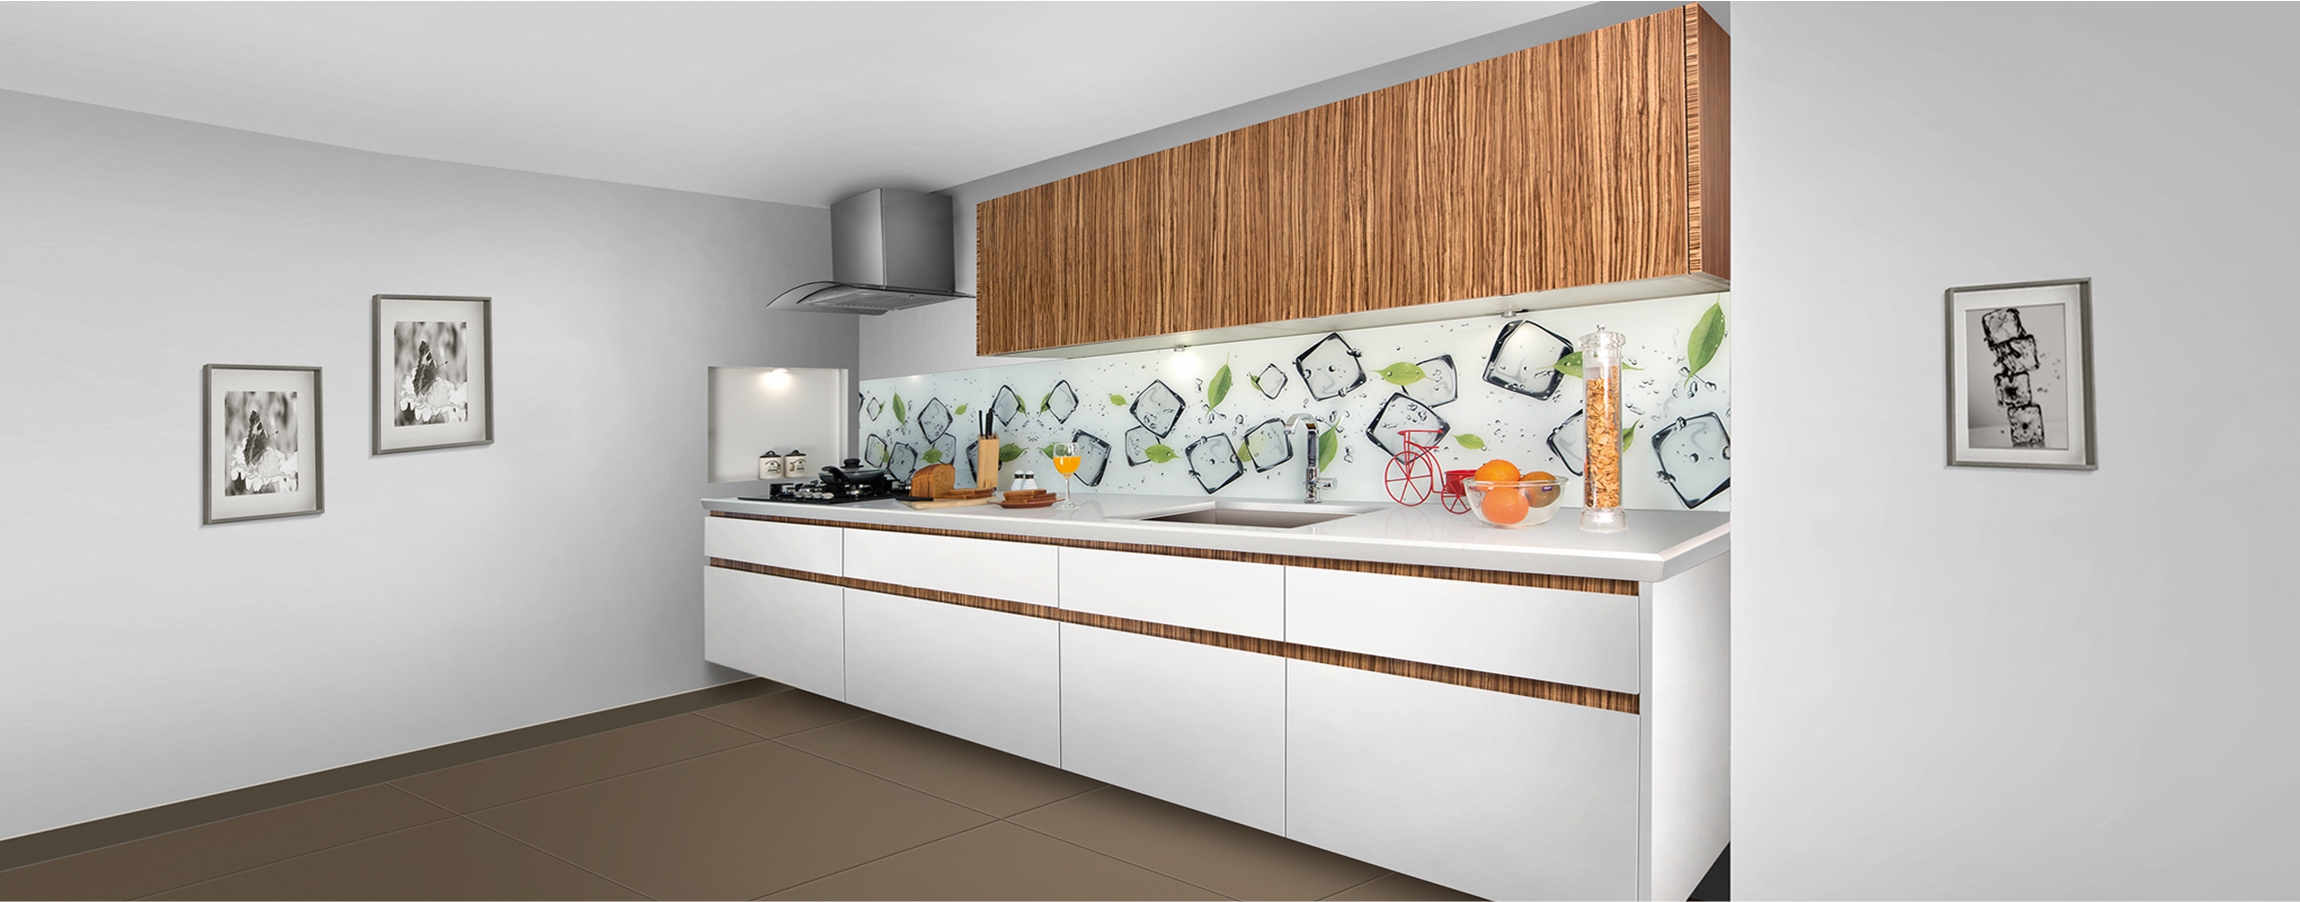 Sleek Modular Kitchen Gallery